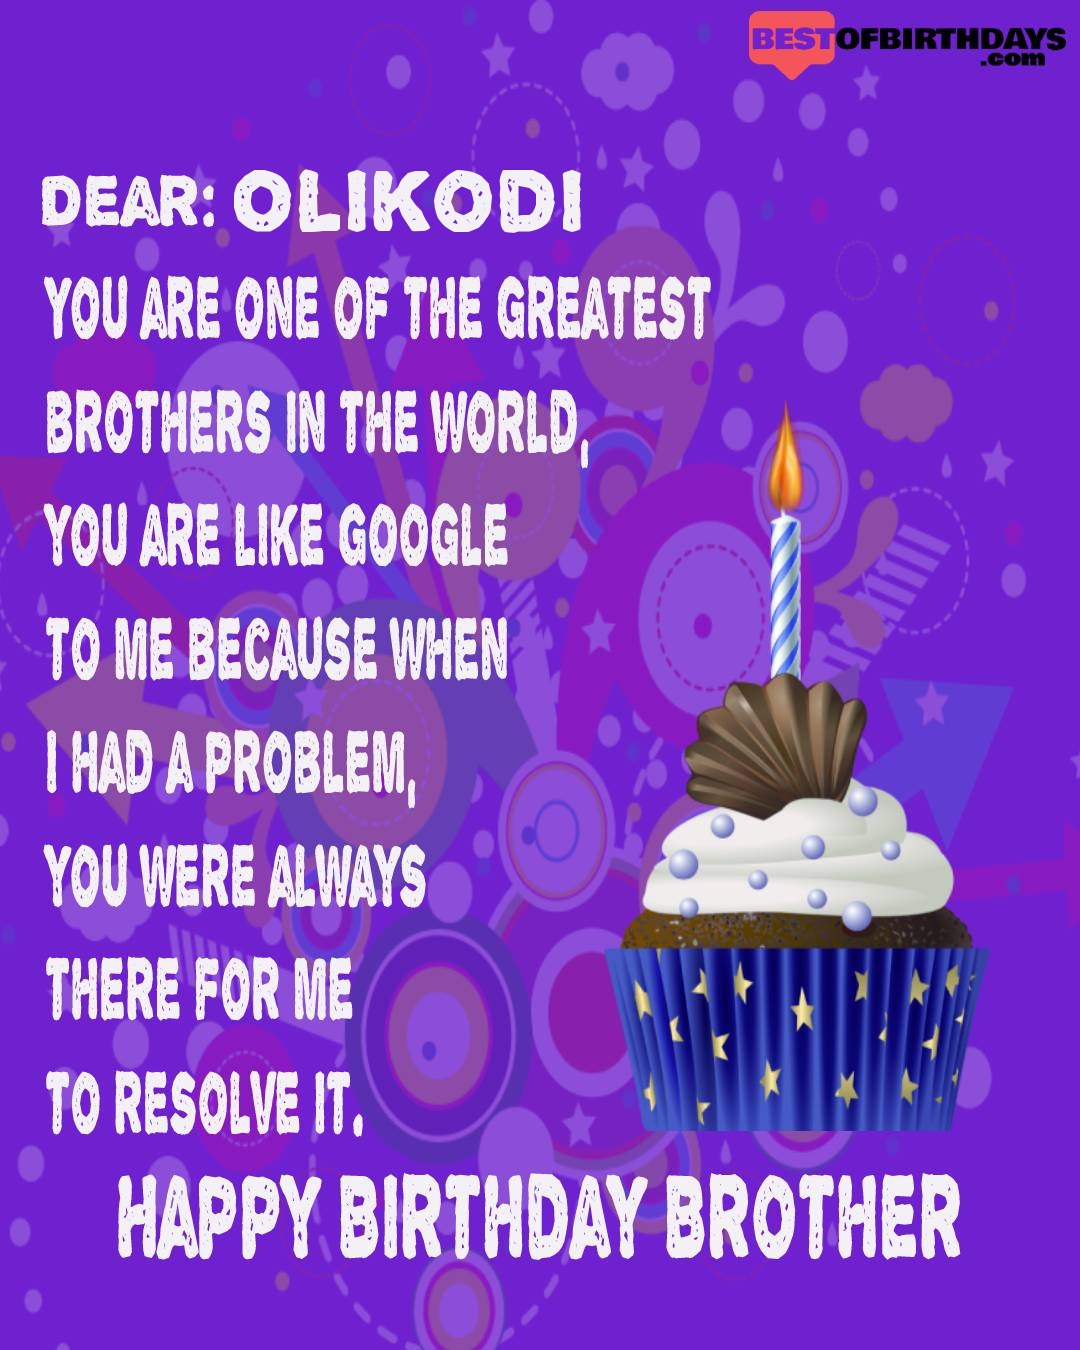 Happy birthday olikodi bhai brother bro